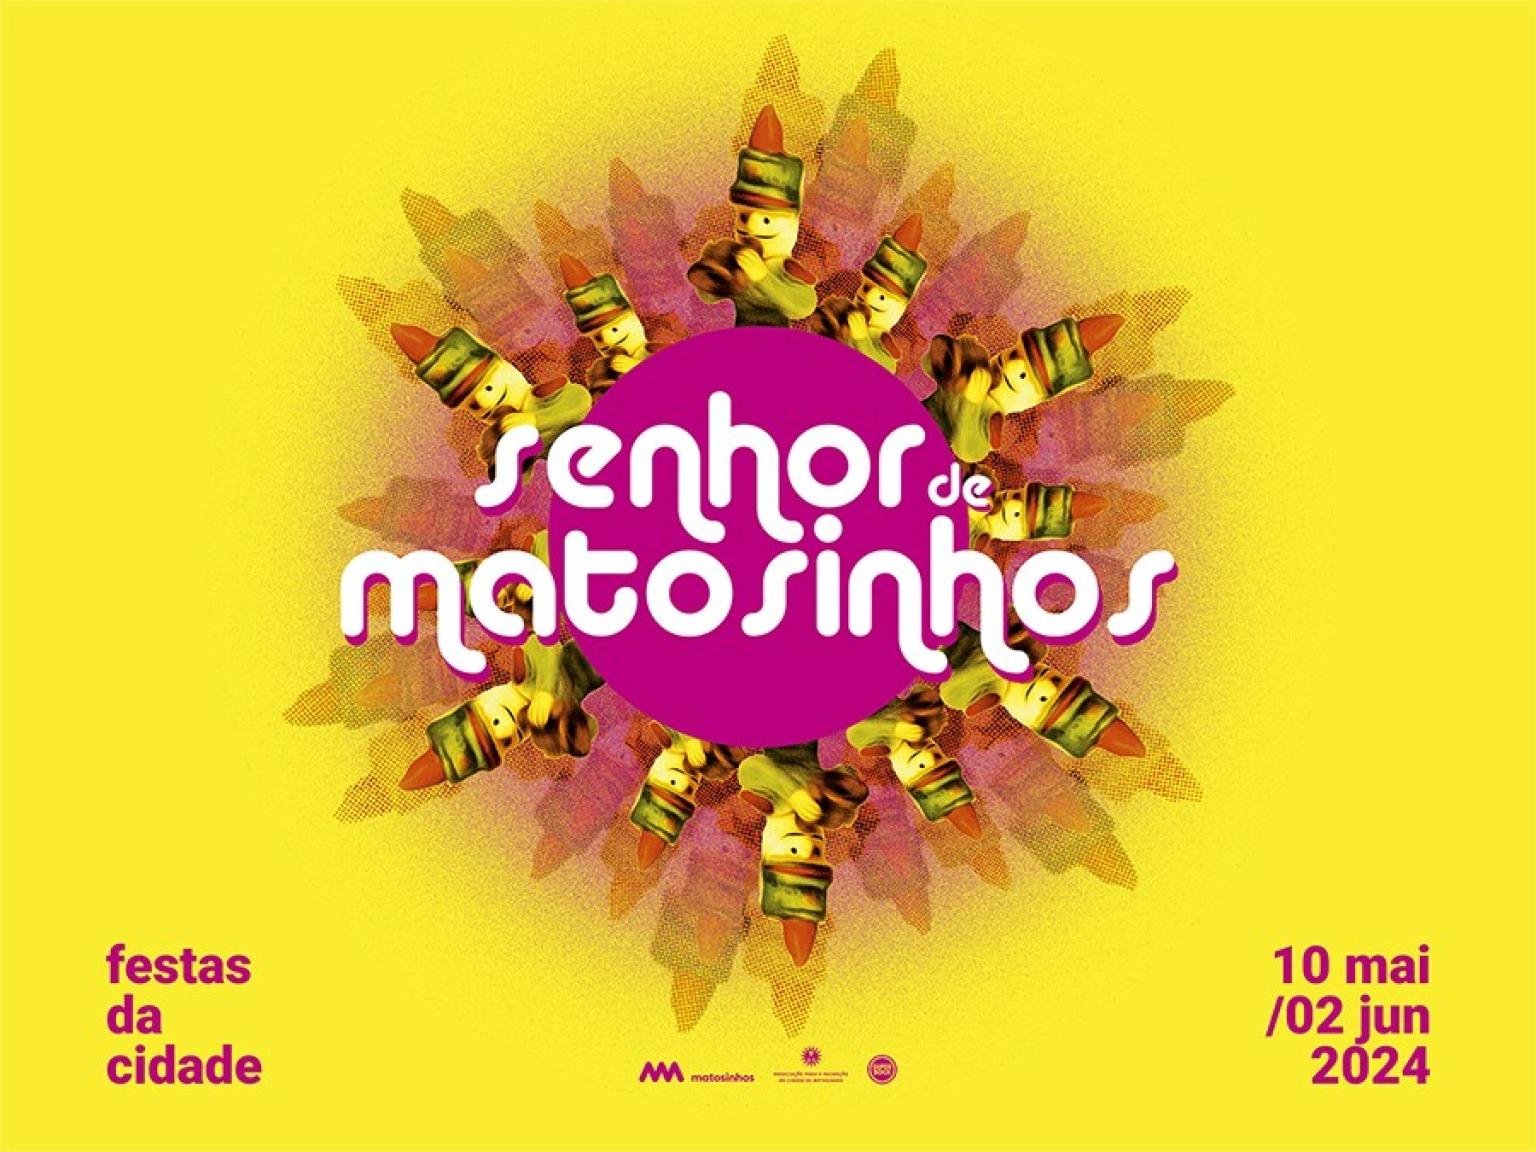 Poster of Senhor de Matosinhos 2024 with vibrant colors and festive decorations